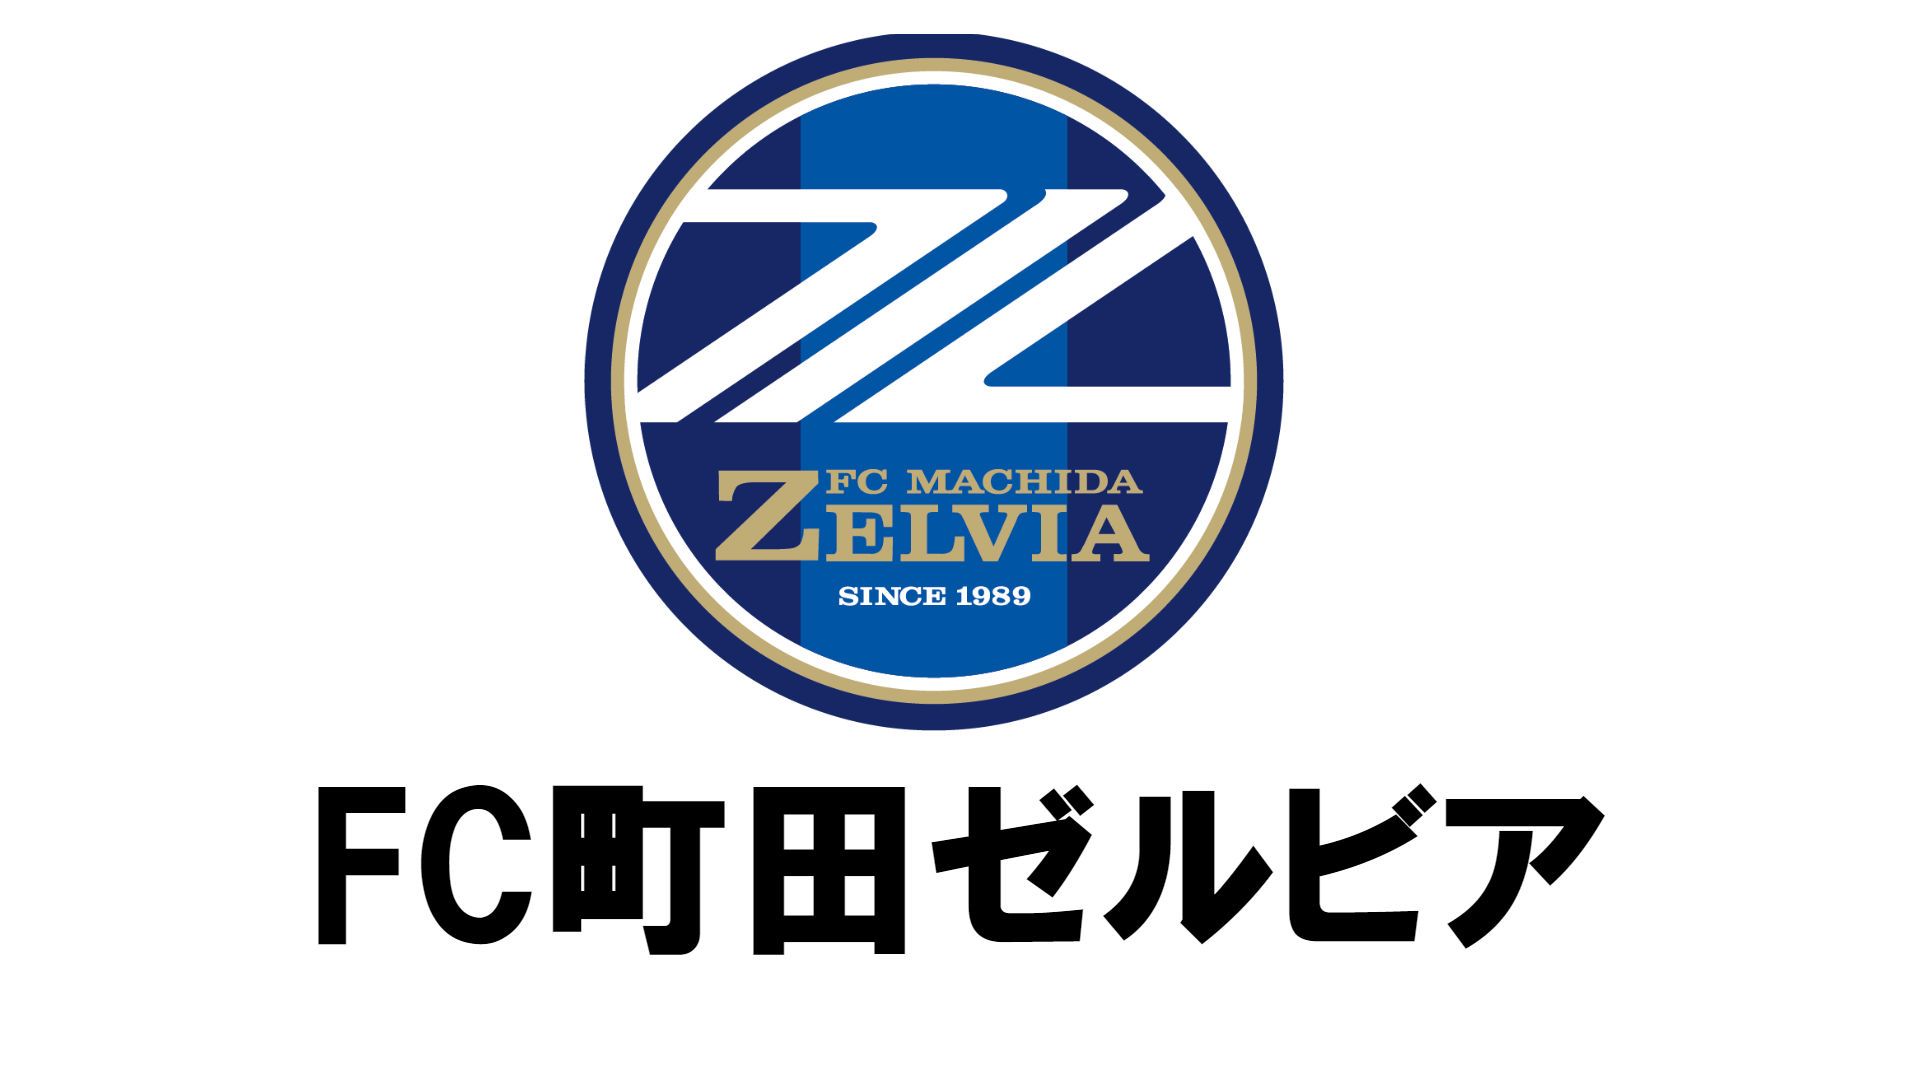 FC町田ゼルビア.jpg